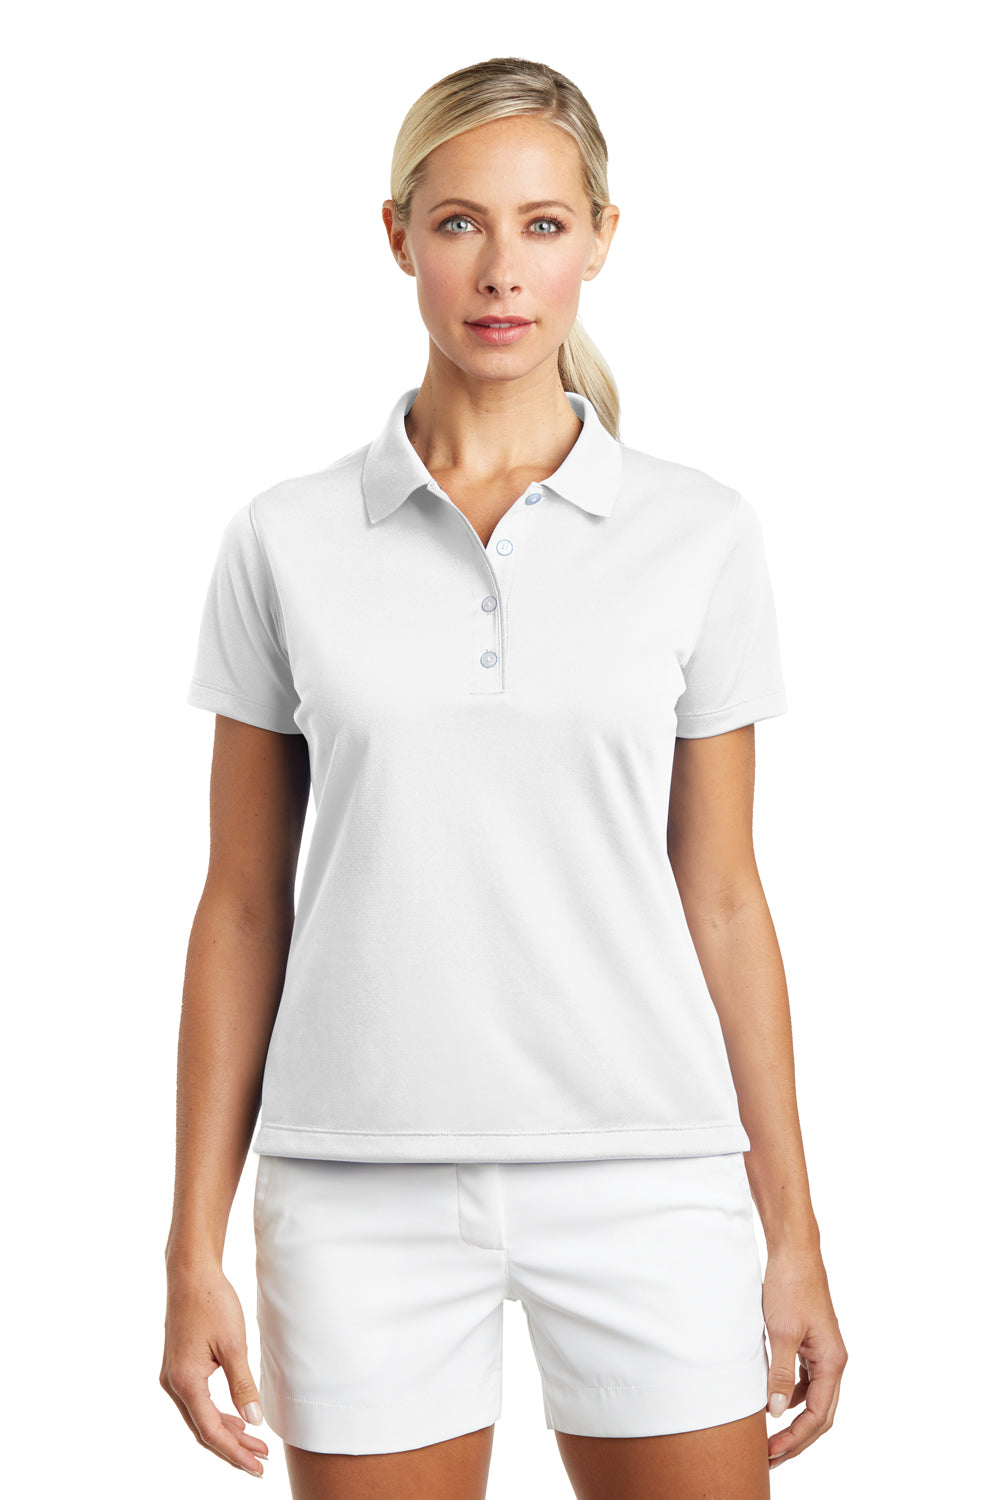 Nike 203697 Womens Tech Basic Dri-Fit Moisture Wicking Short Sleeve Polo Shirt White Model Front